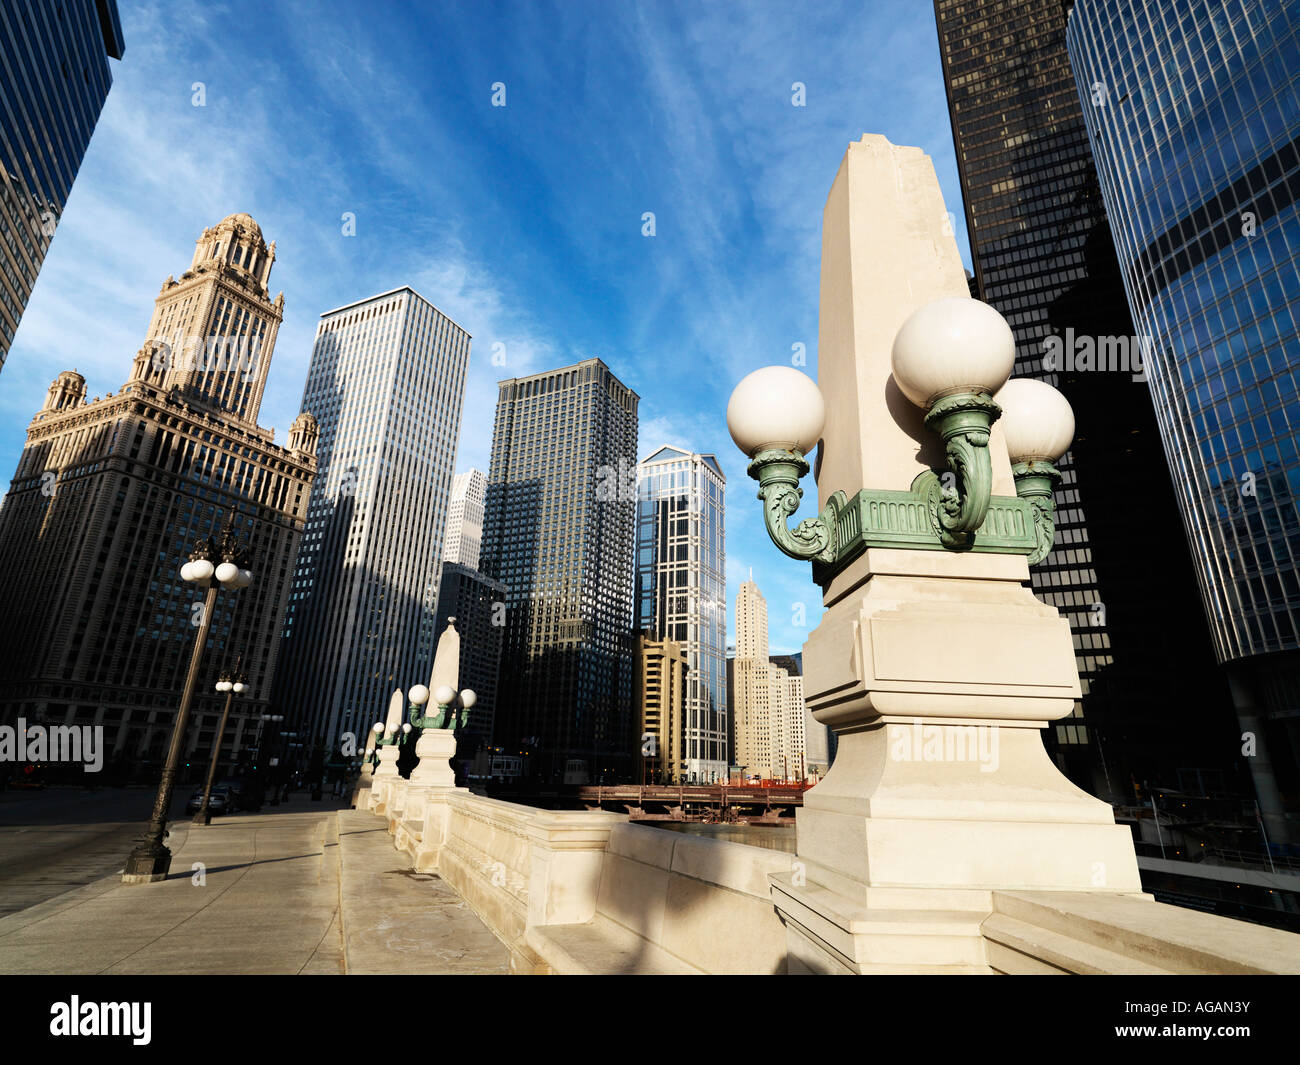 Street scene in Chicago Illinois Stock Photo